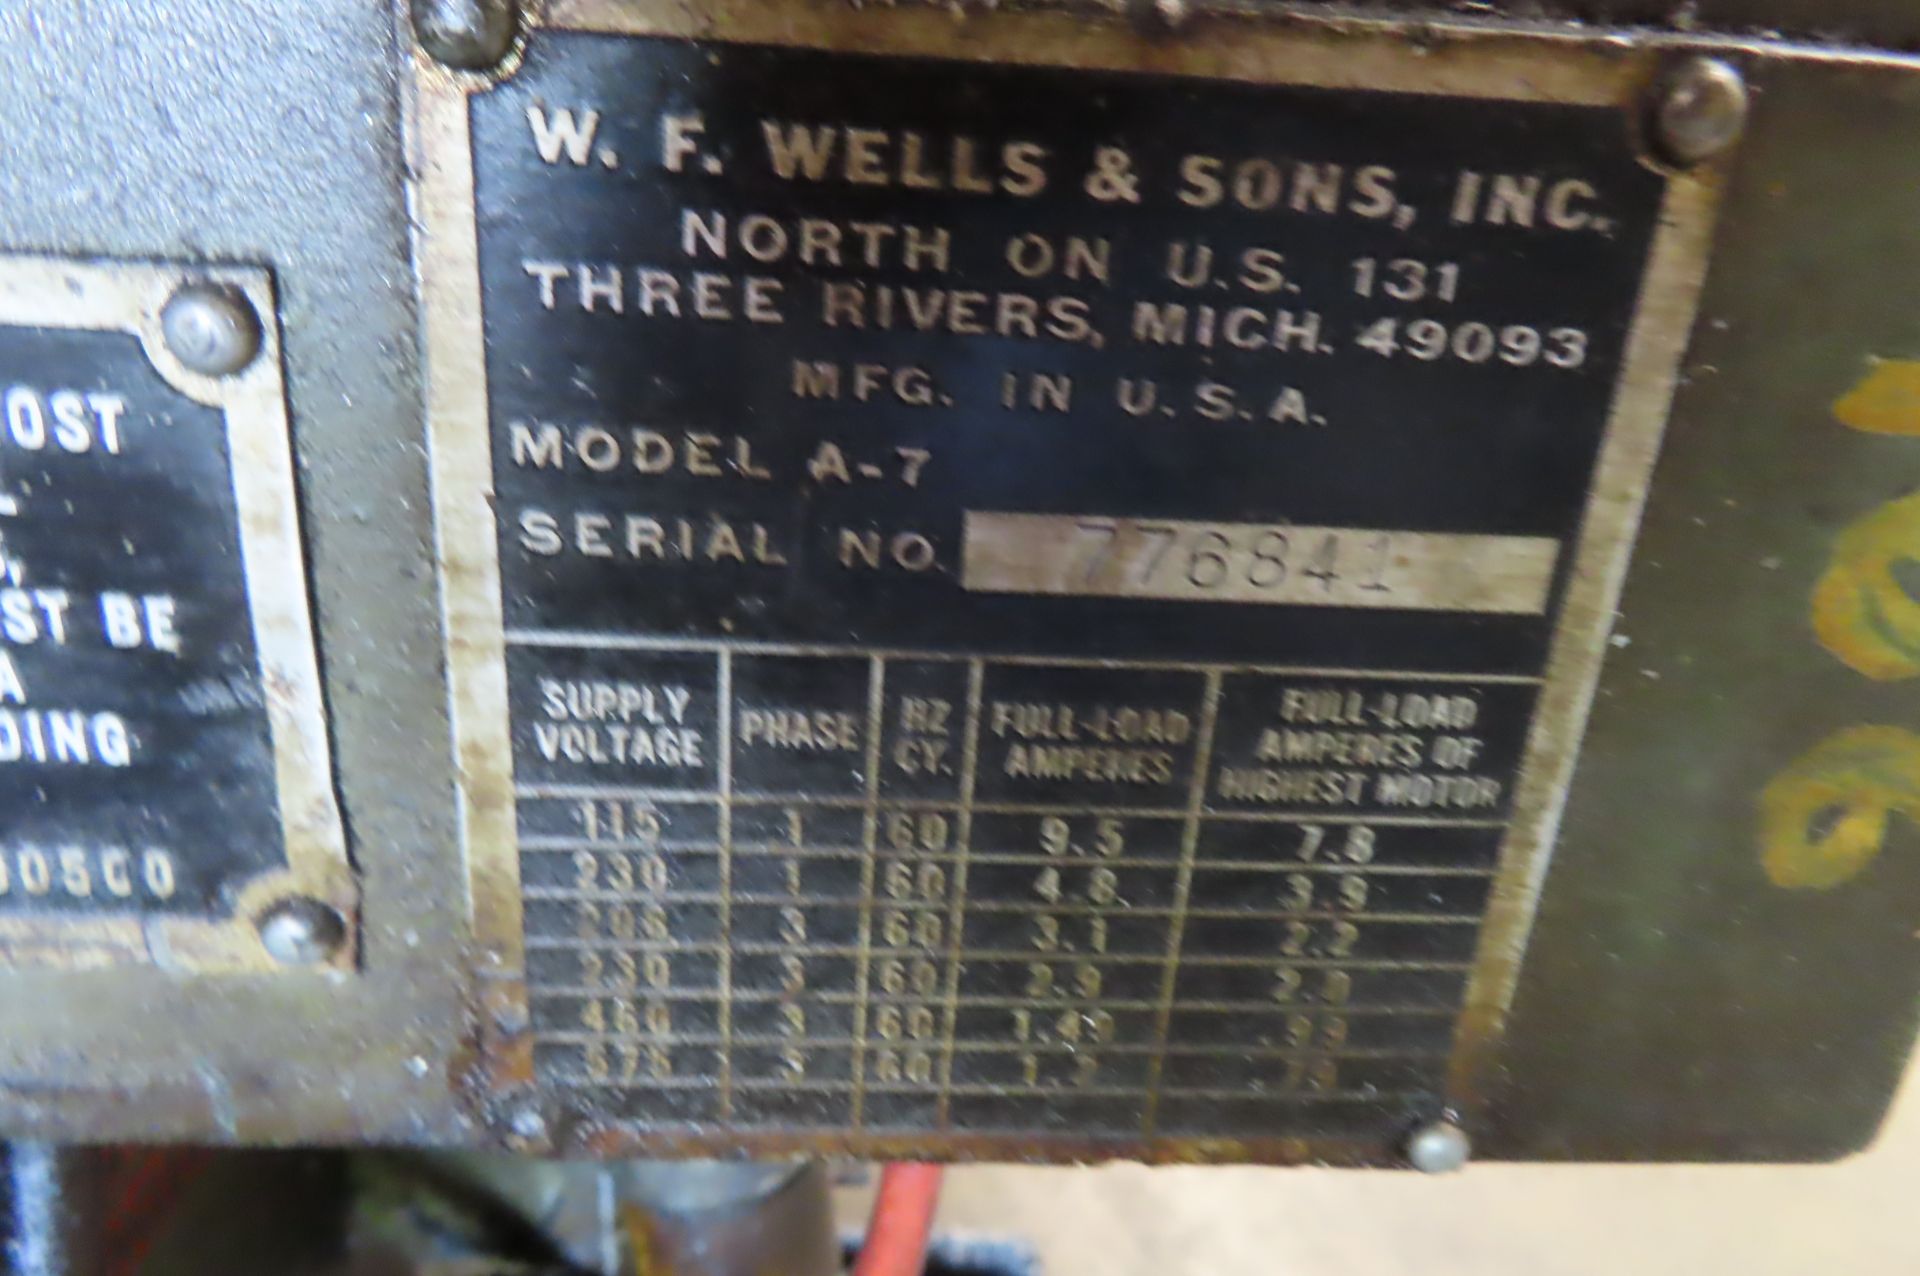 W.F. WELLS & SONS HORIZONTAL BANDSAW, MODEL A-7, S/N 776841… - Image 4 of 4